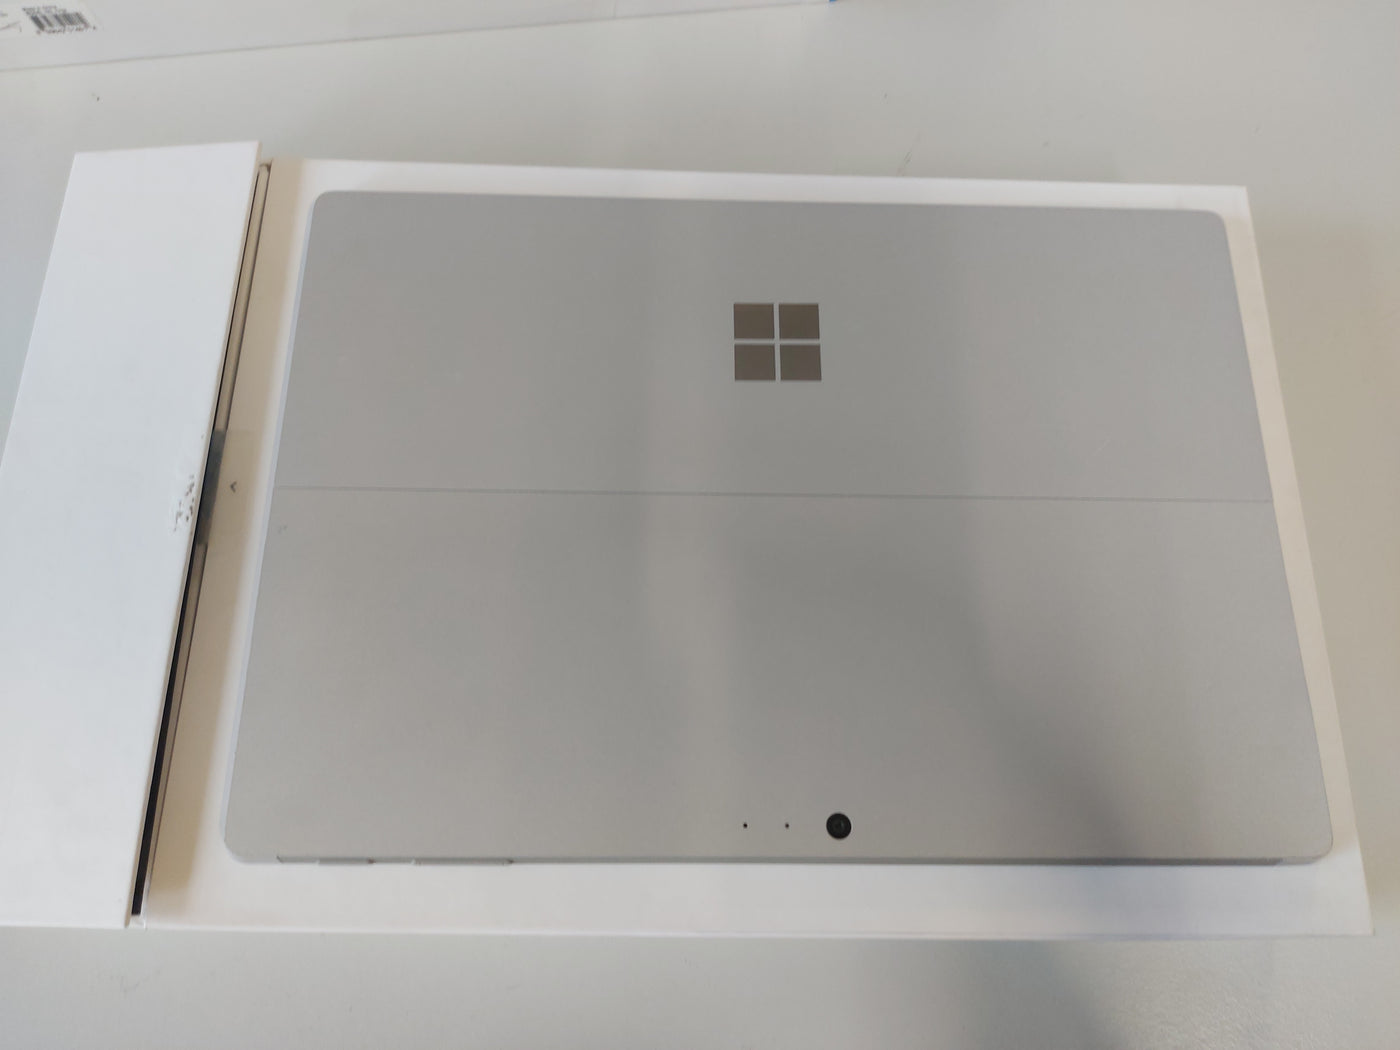 Microsoft Surface Pro 4 1724 128GB Core i5-6300U 2400MHz 4GB RAM ( USED )